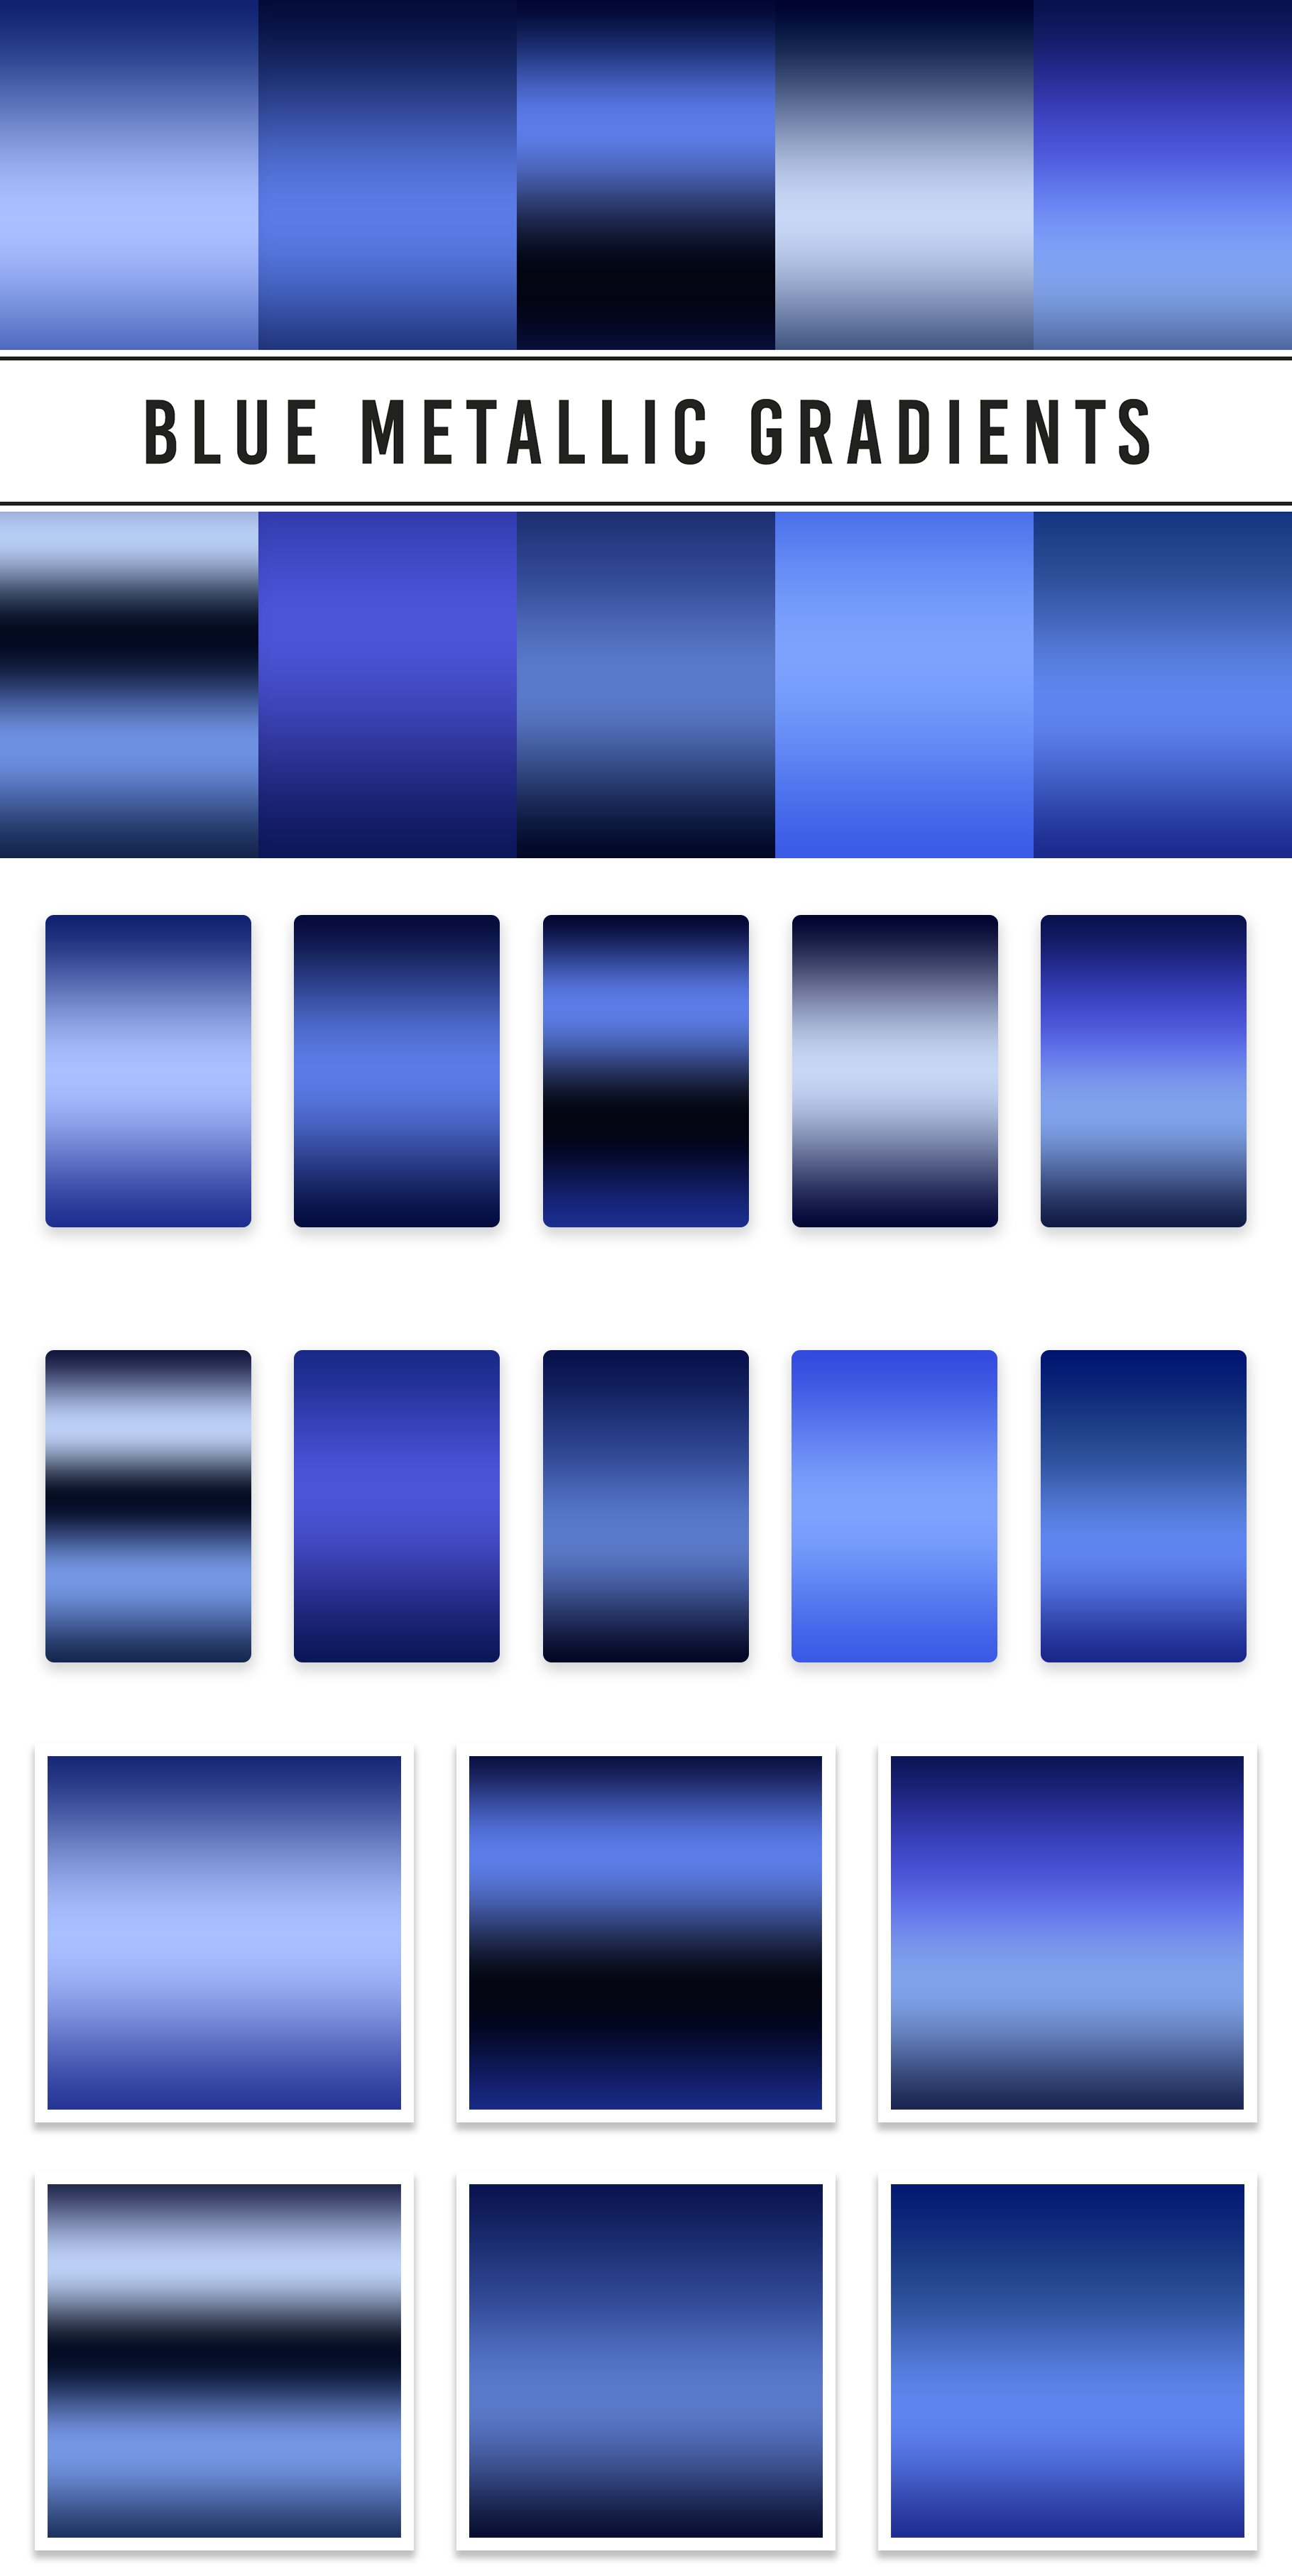 Blue Metallic Gradients cover image.